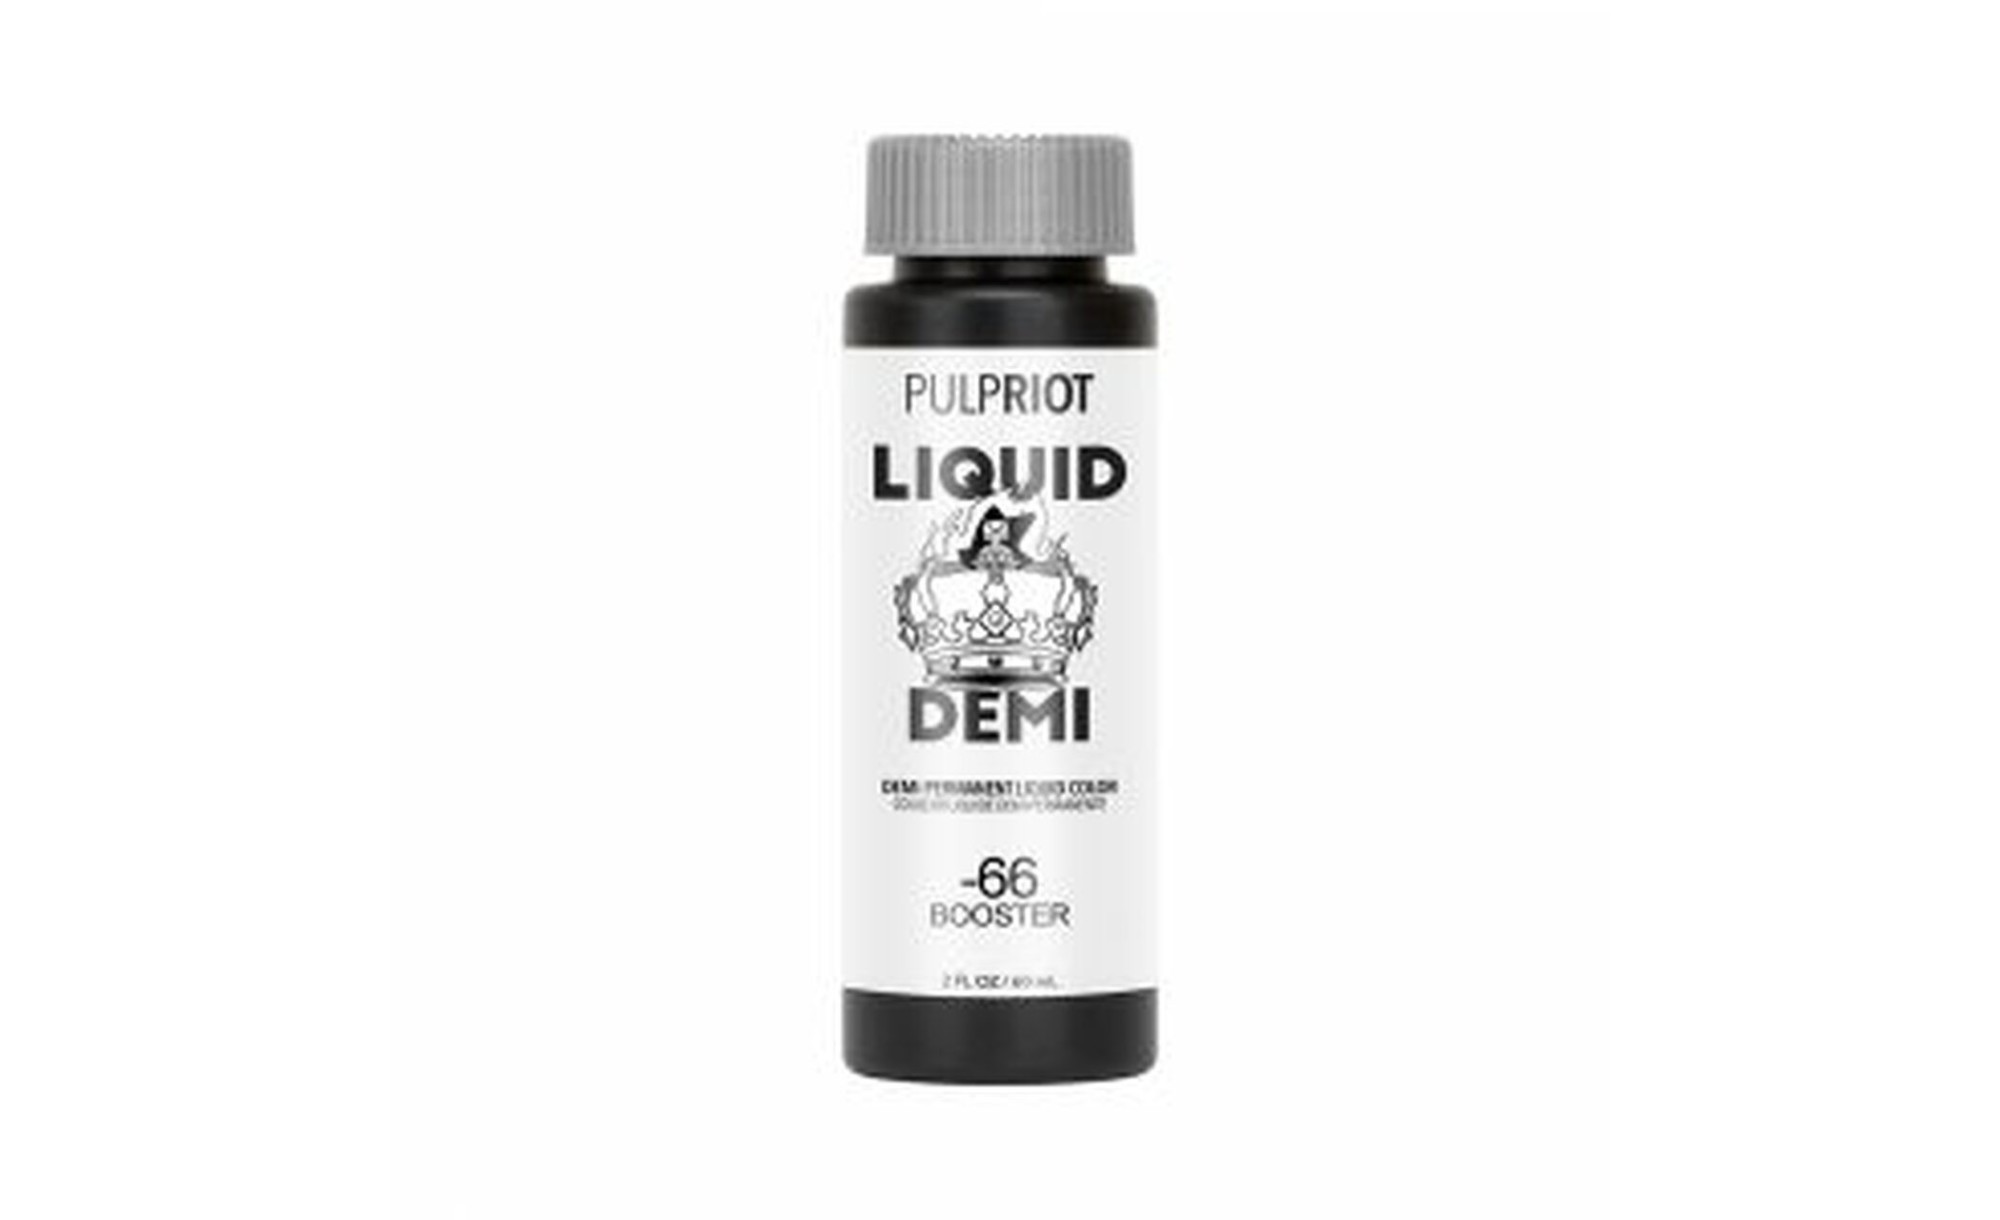 Pulp Riot Liquid Demi Red Booster -66